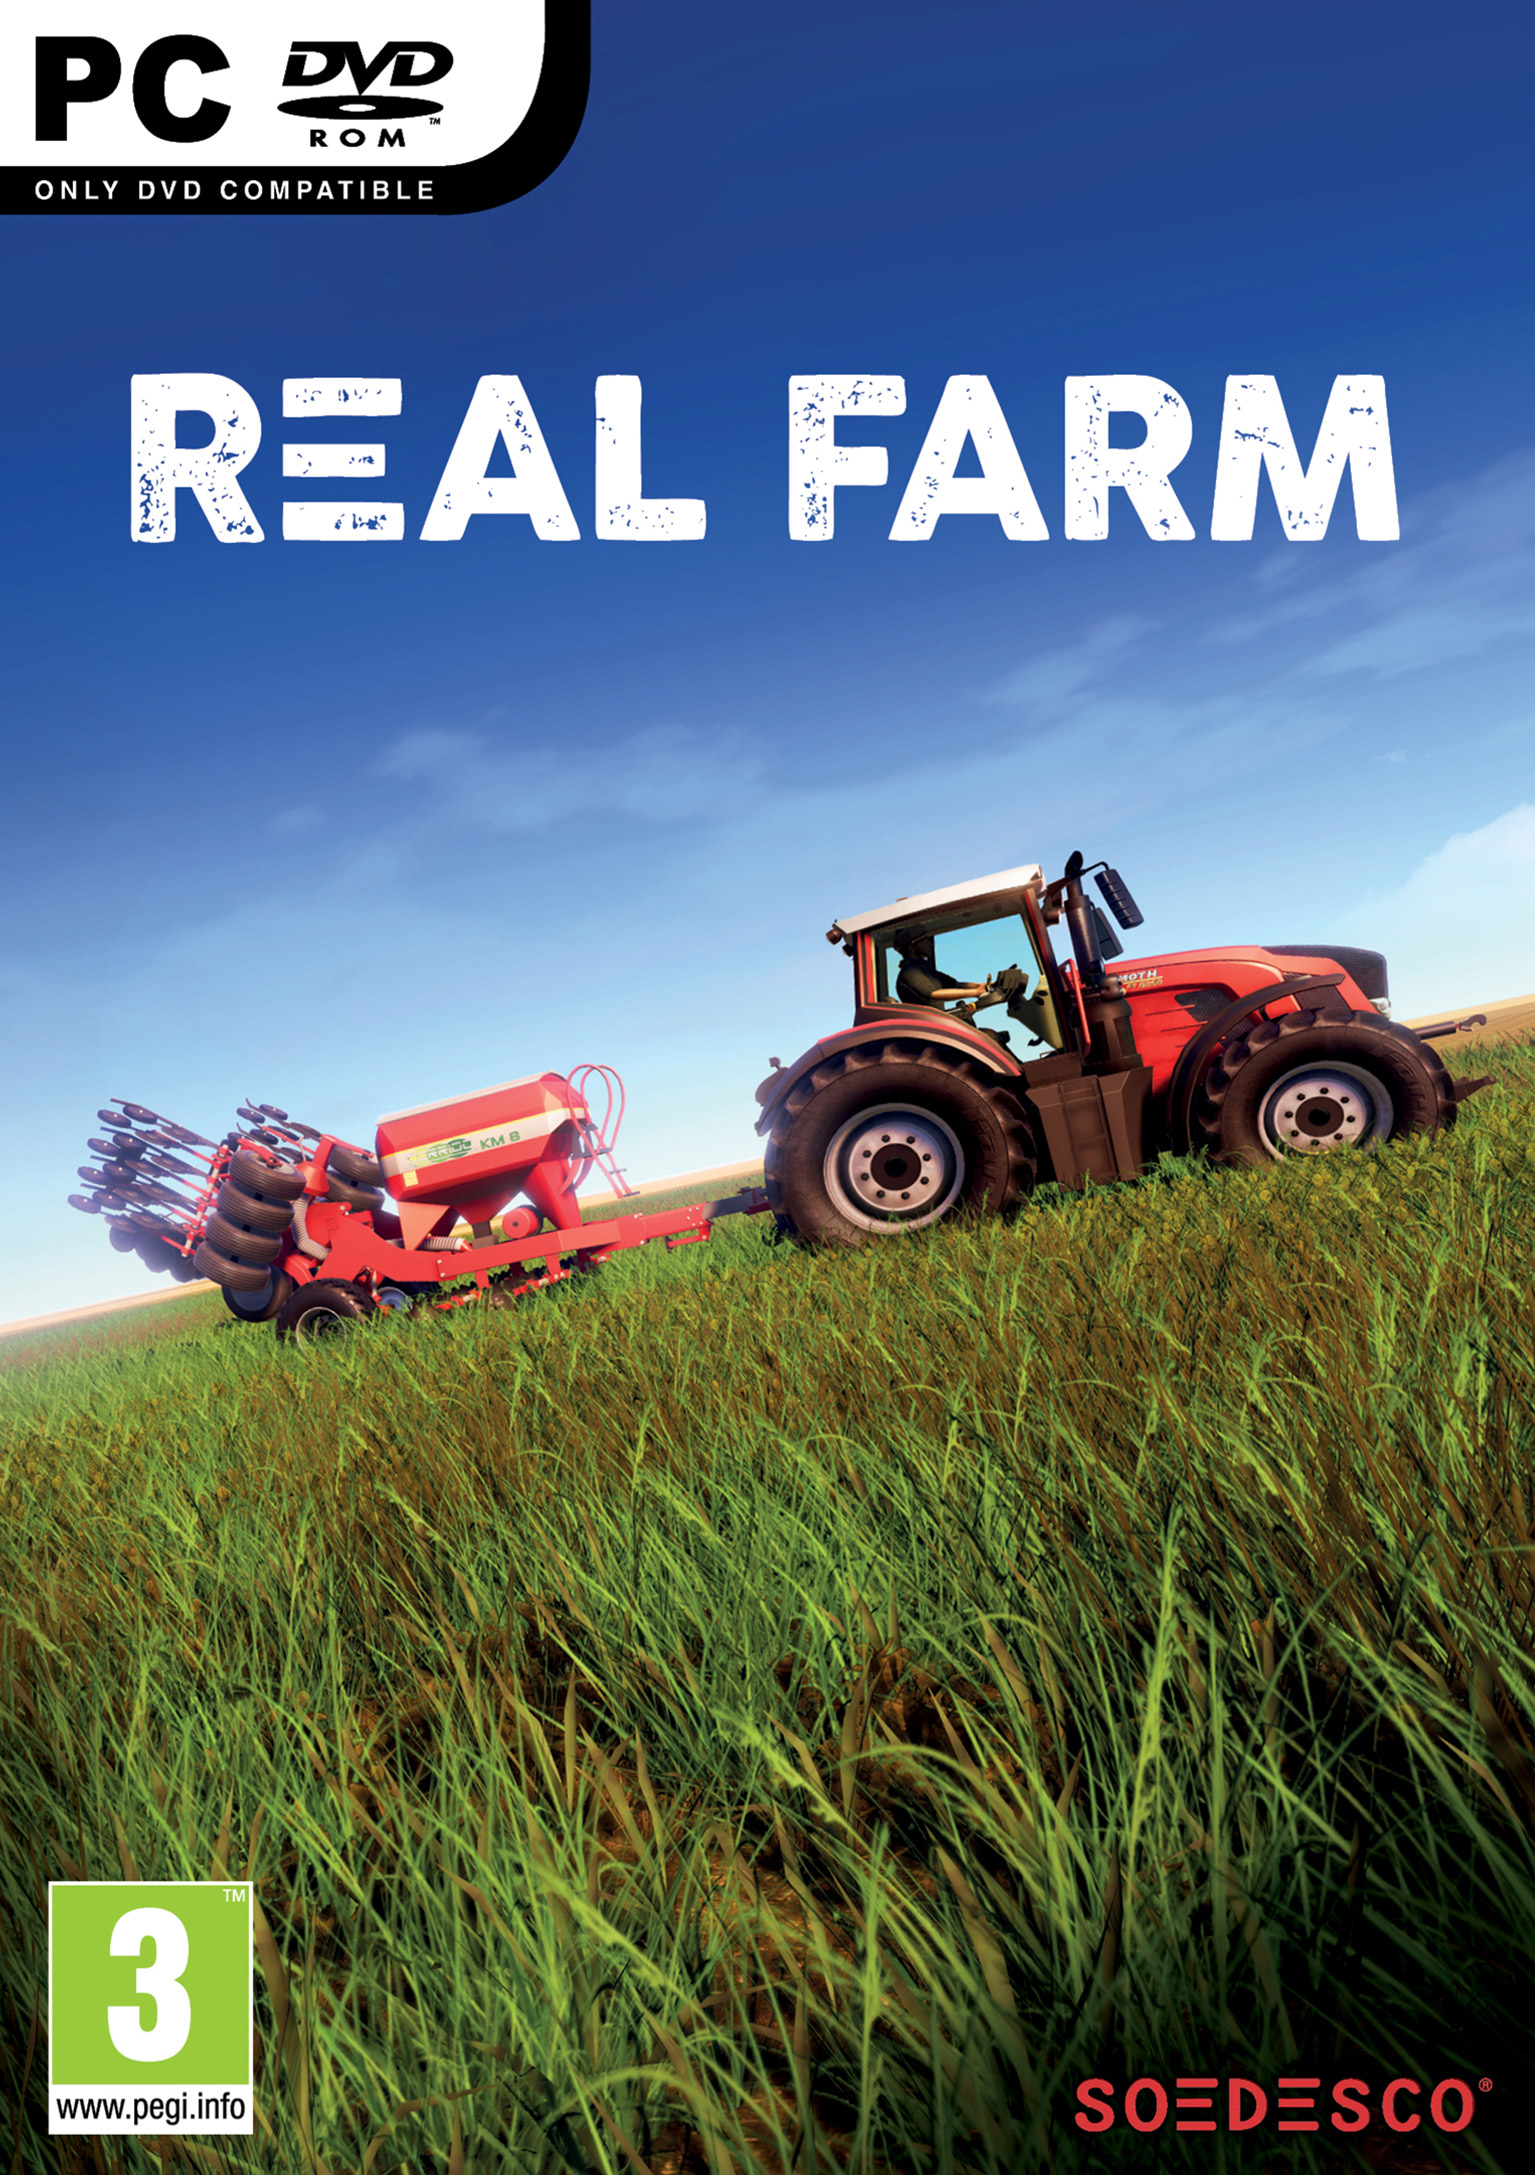 Real Farm - pedn DVD obal 2